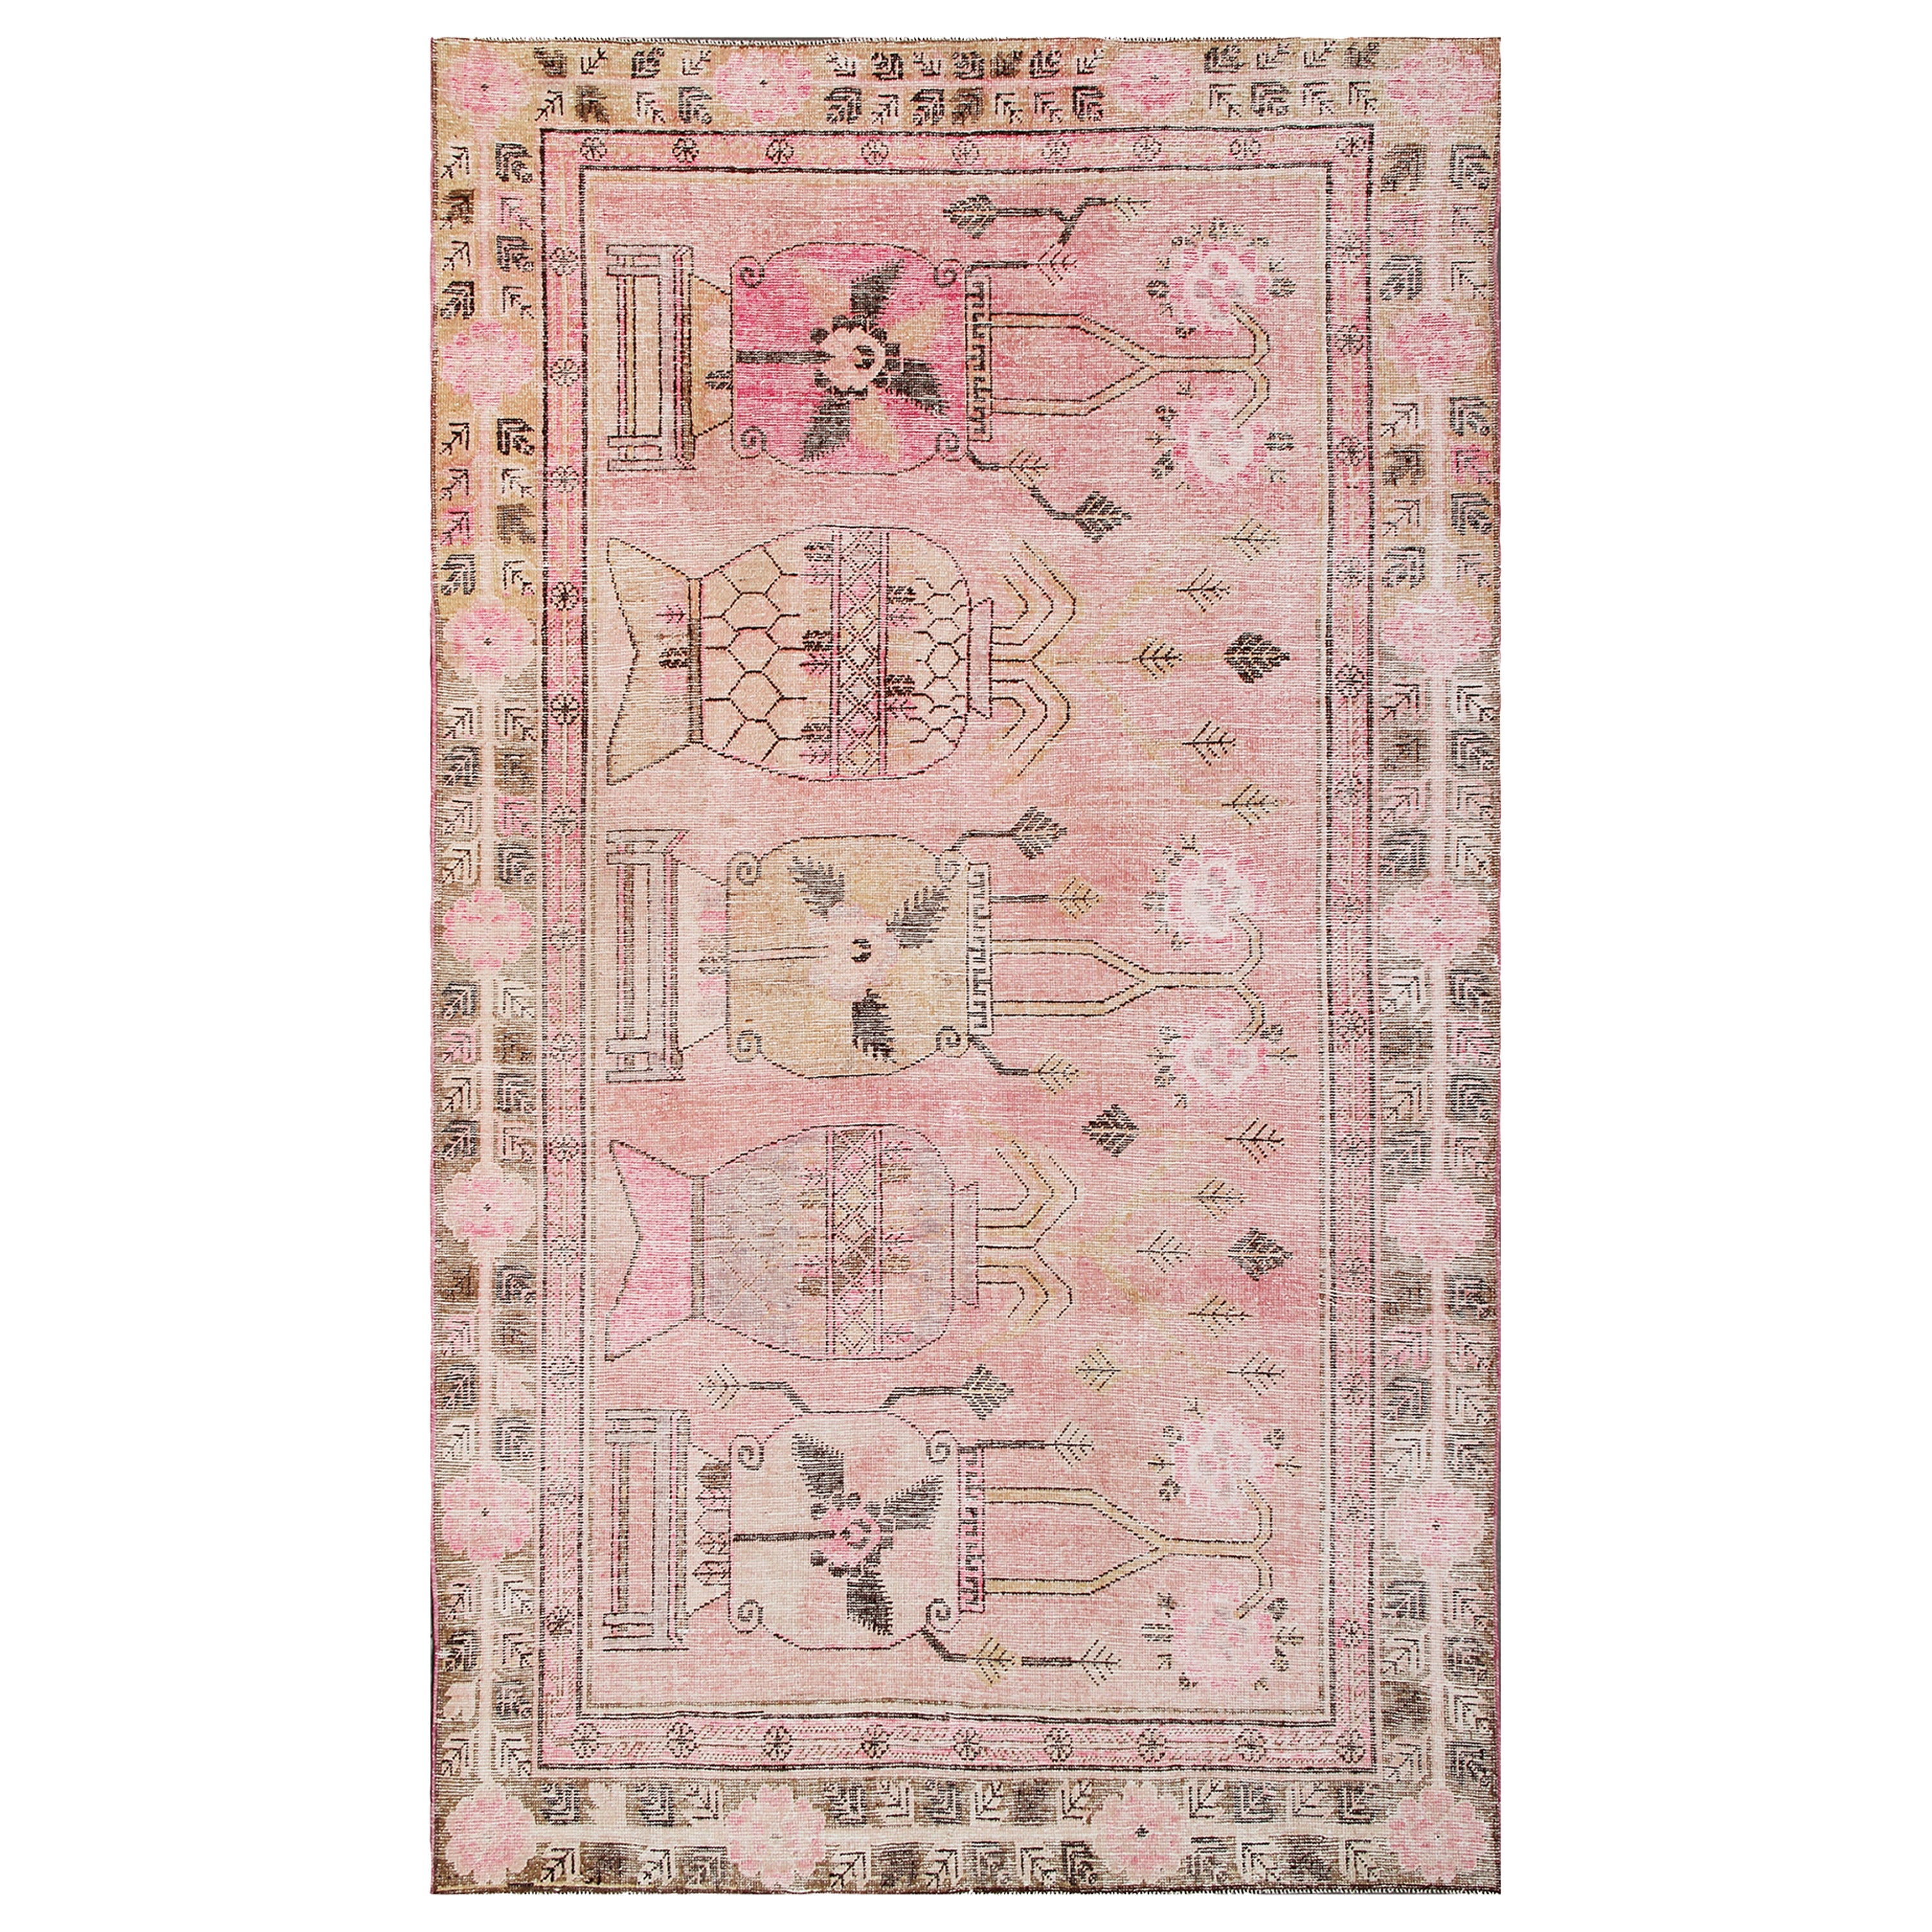 Pink Vintage Wool Cotton Blend Rug - 5'3" x 9'